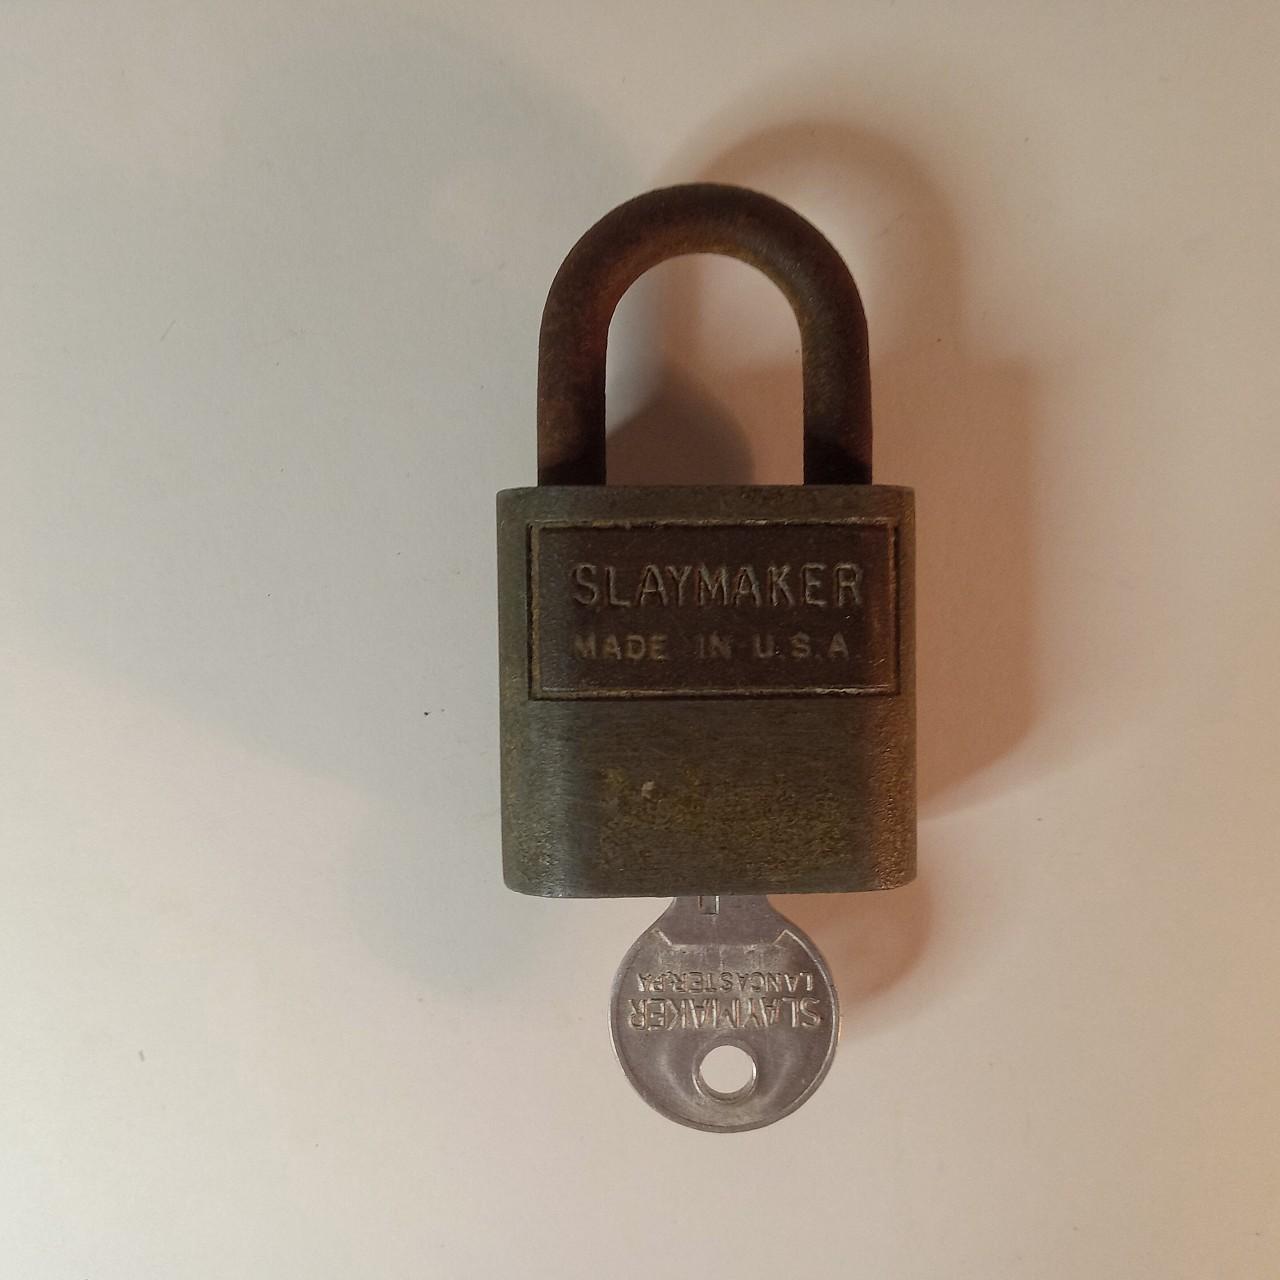 Slaymaker vintage locks collection, brass & steel padlocks locked without  keys